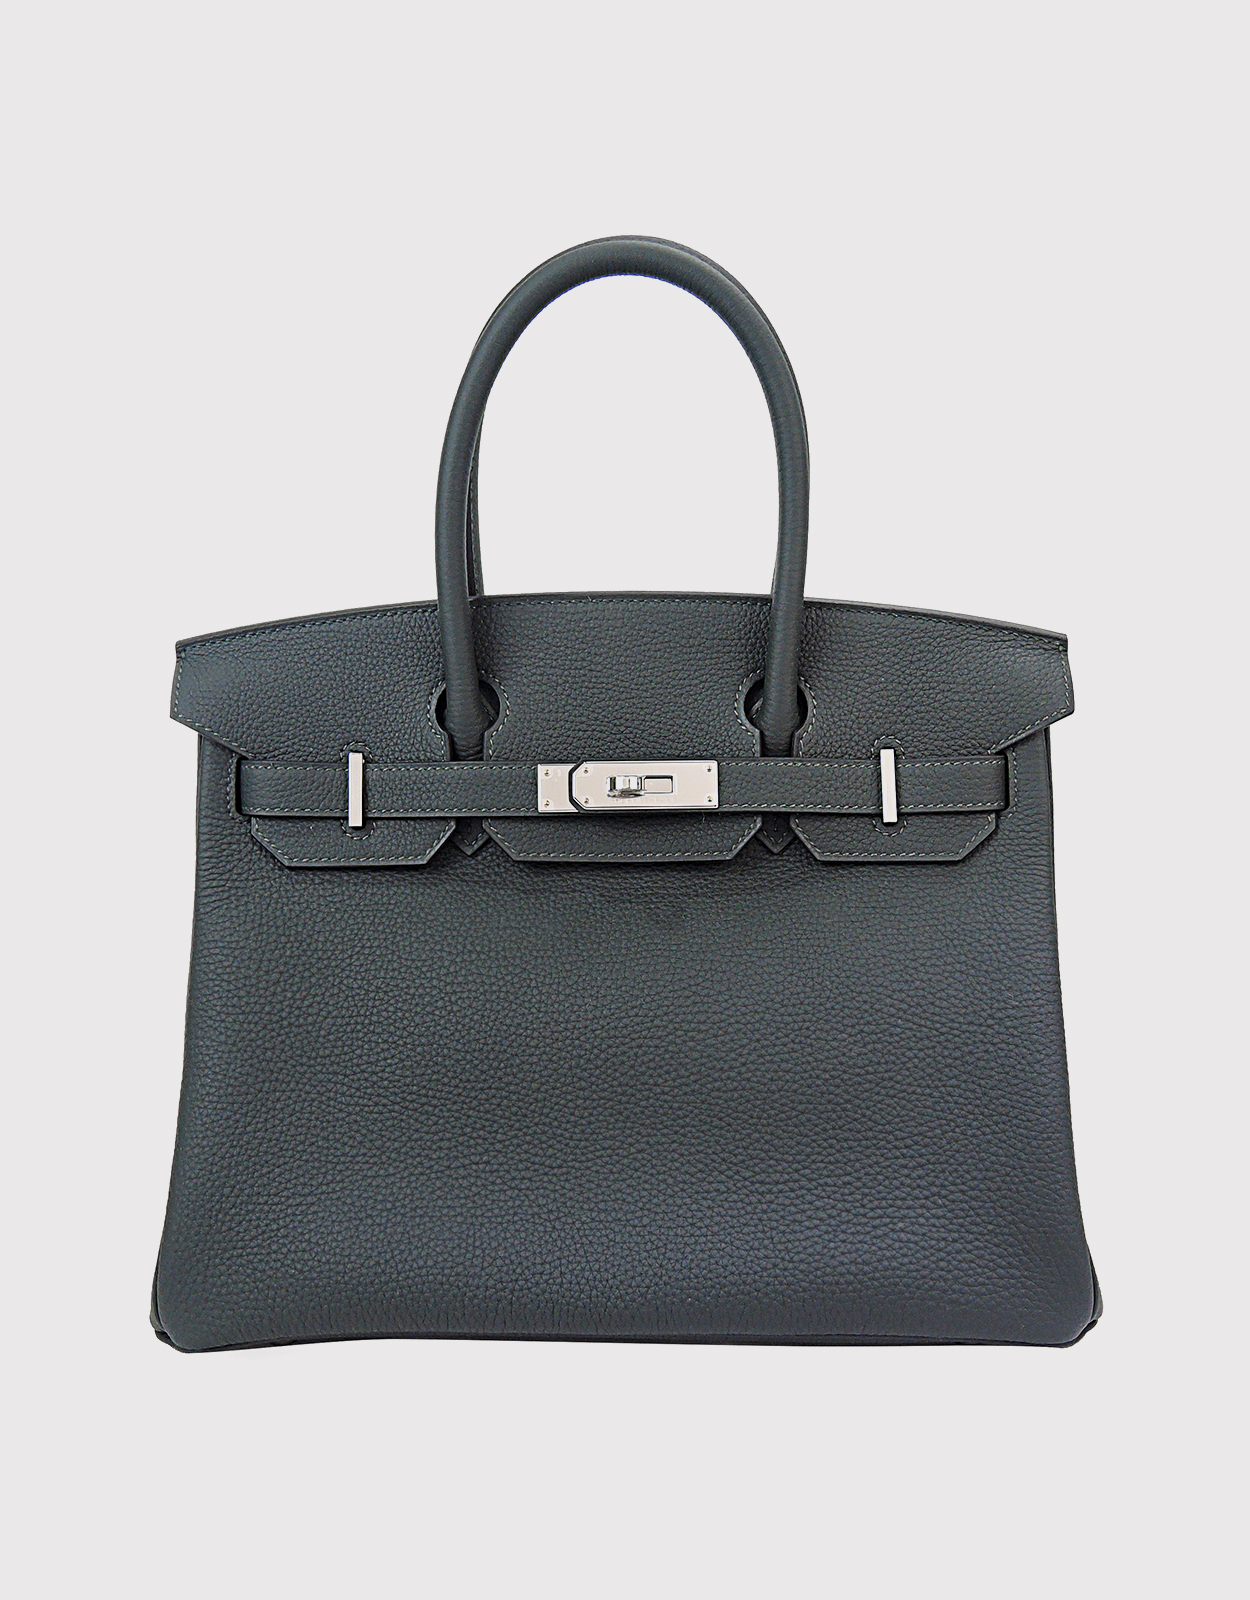 Hermes Birkin Designer Tote Bag Togo Leather in Dark Green Color